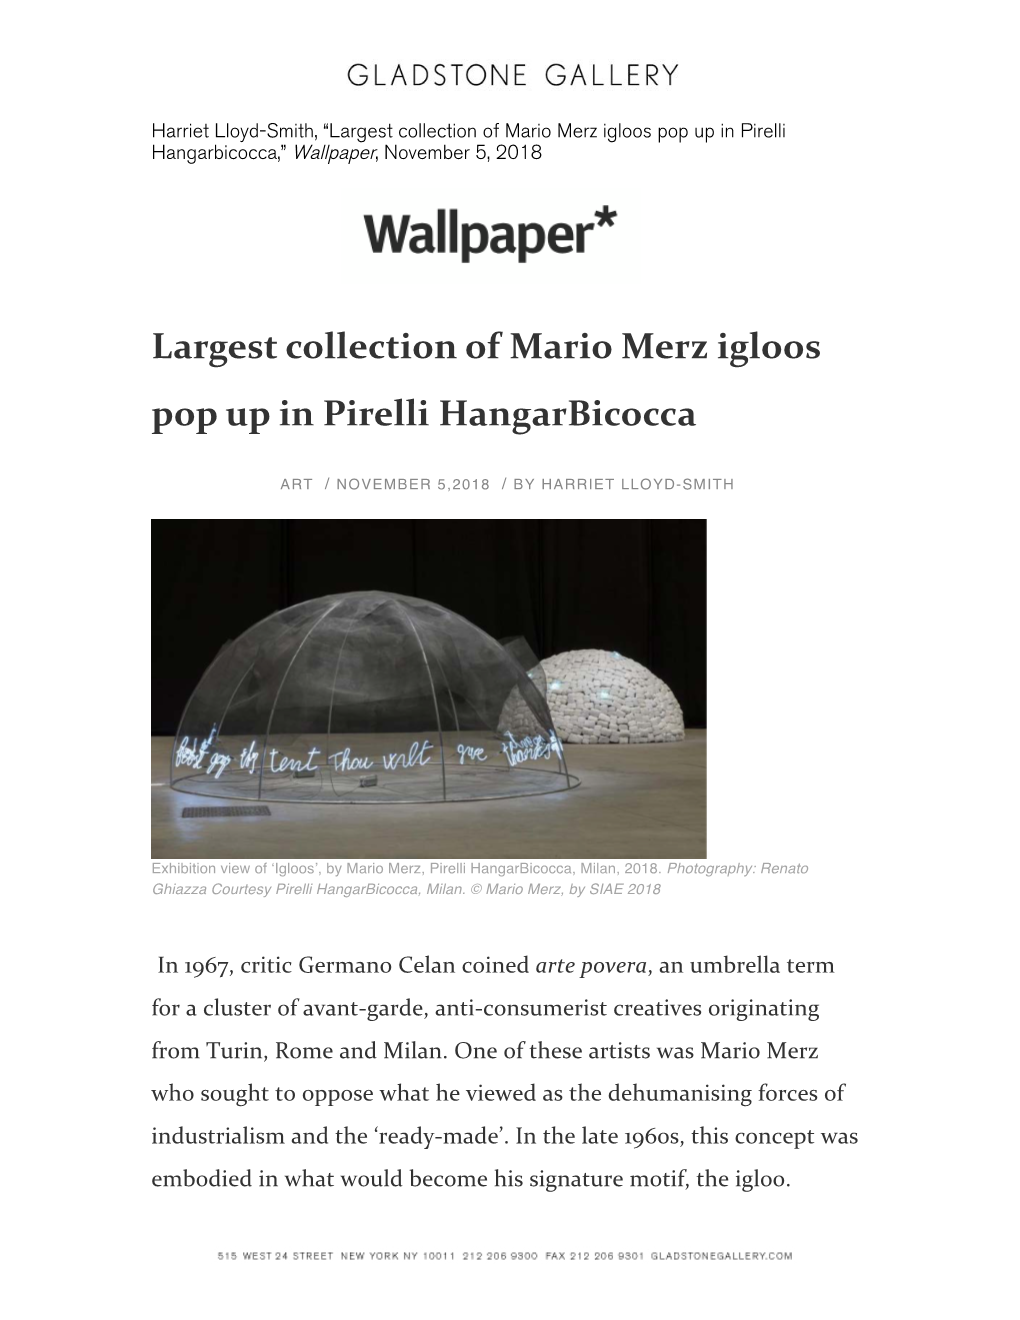 Largest Collection of Mario Merz Igloos Pop up in Pirelli Hangarbicocca,” Wallpaper, November 5, 2018